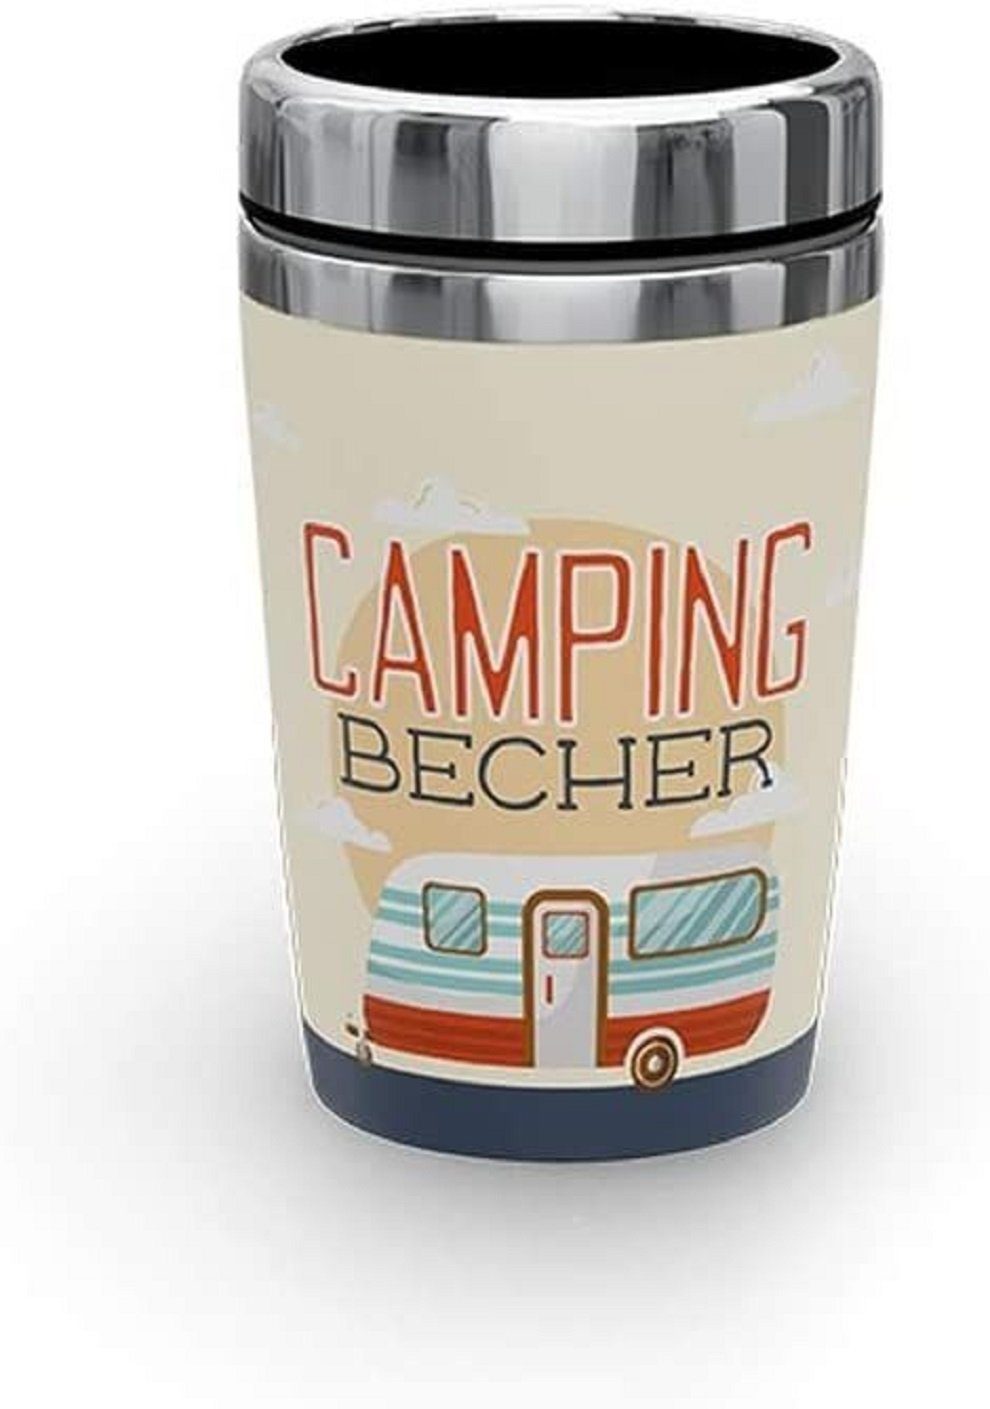 Thermobecher "Camping für Becher", Zeit Vida La Vida La To Thermobecher dich Go